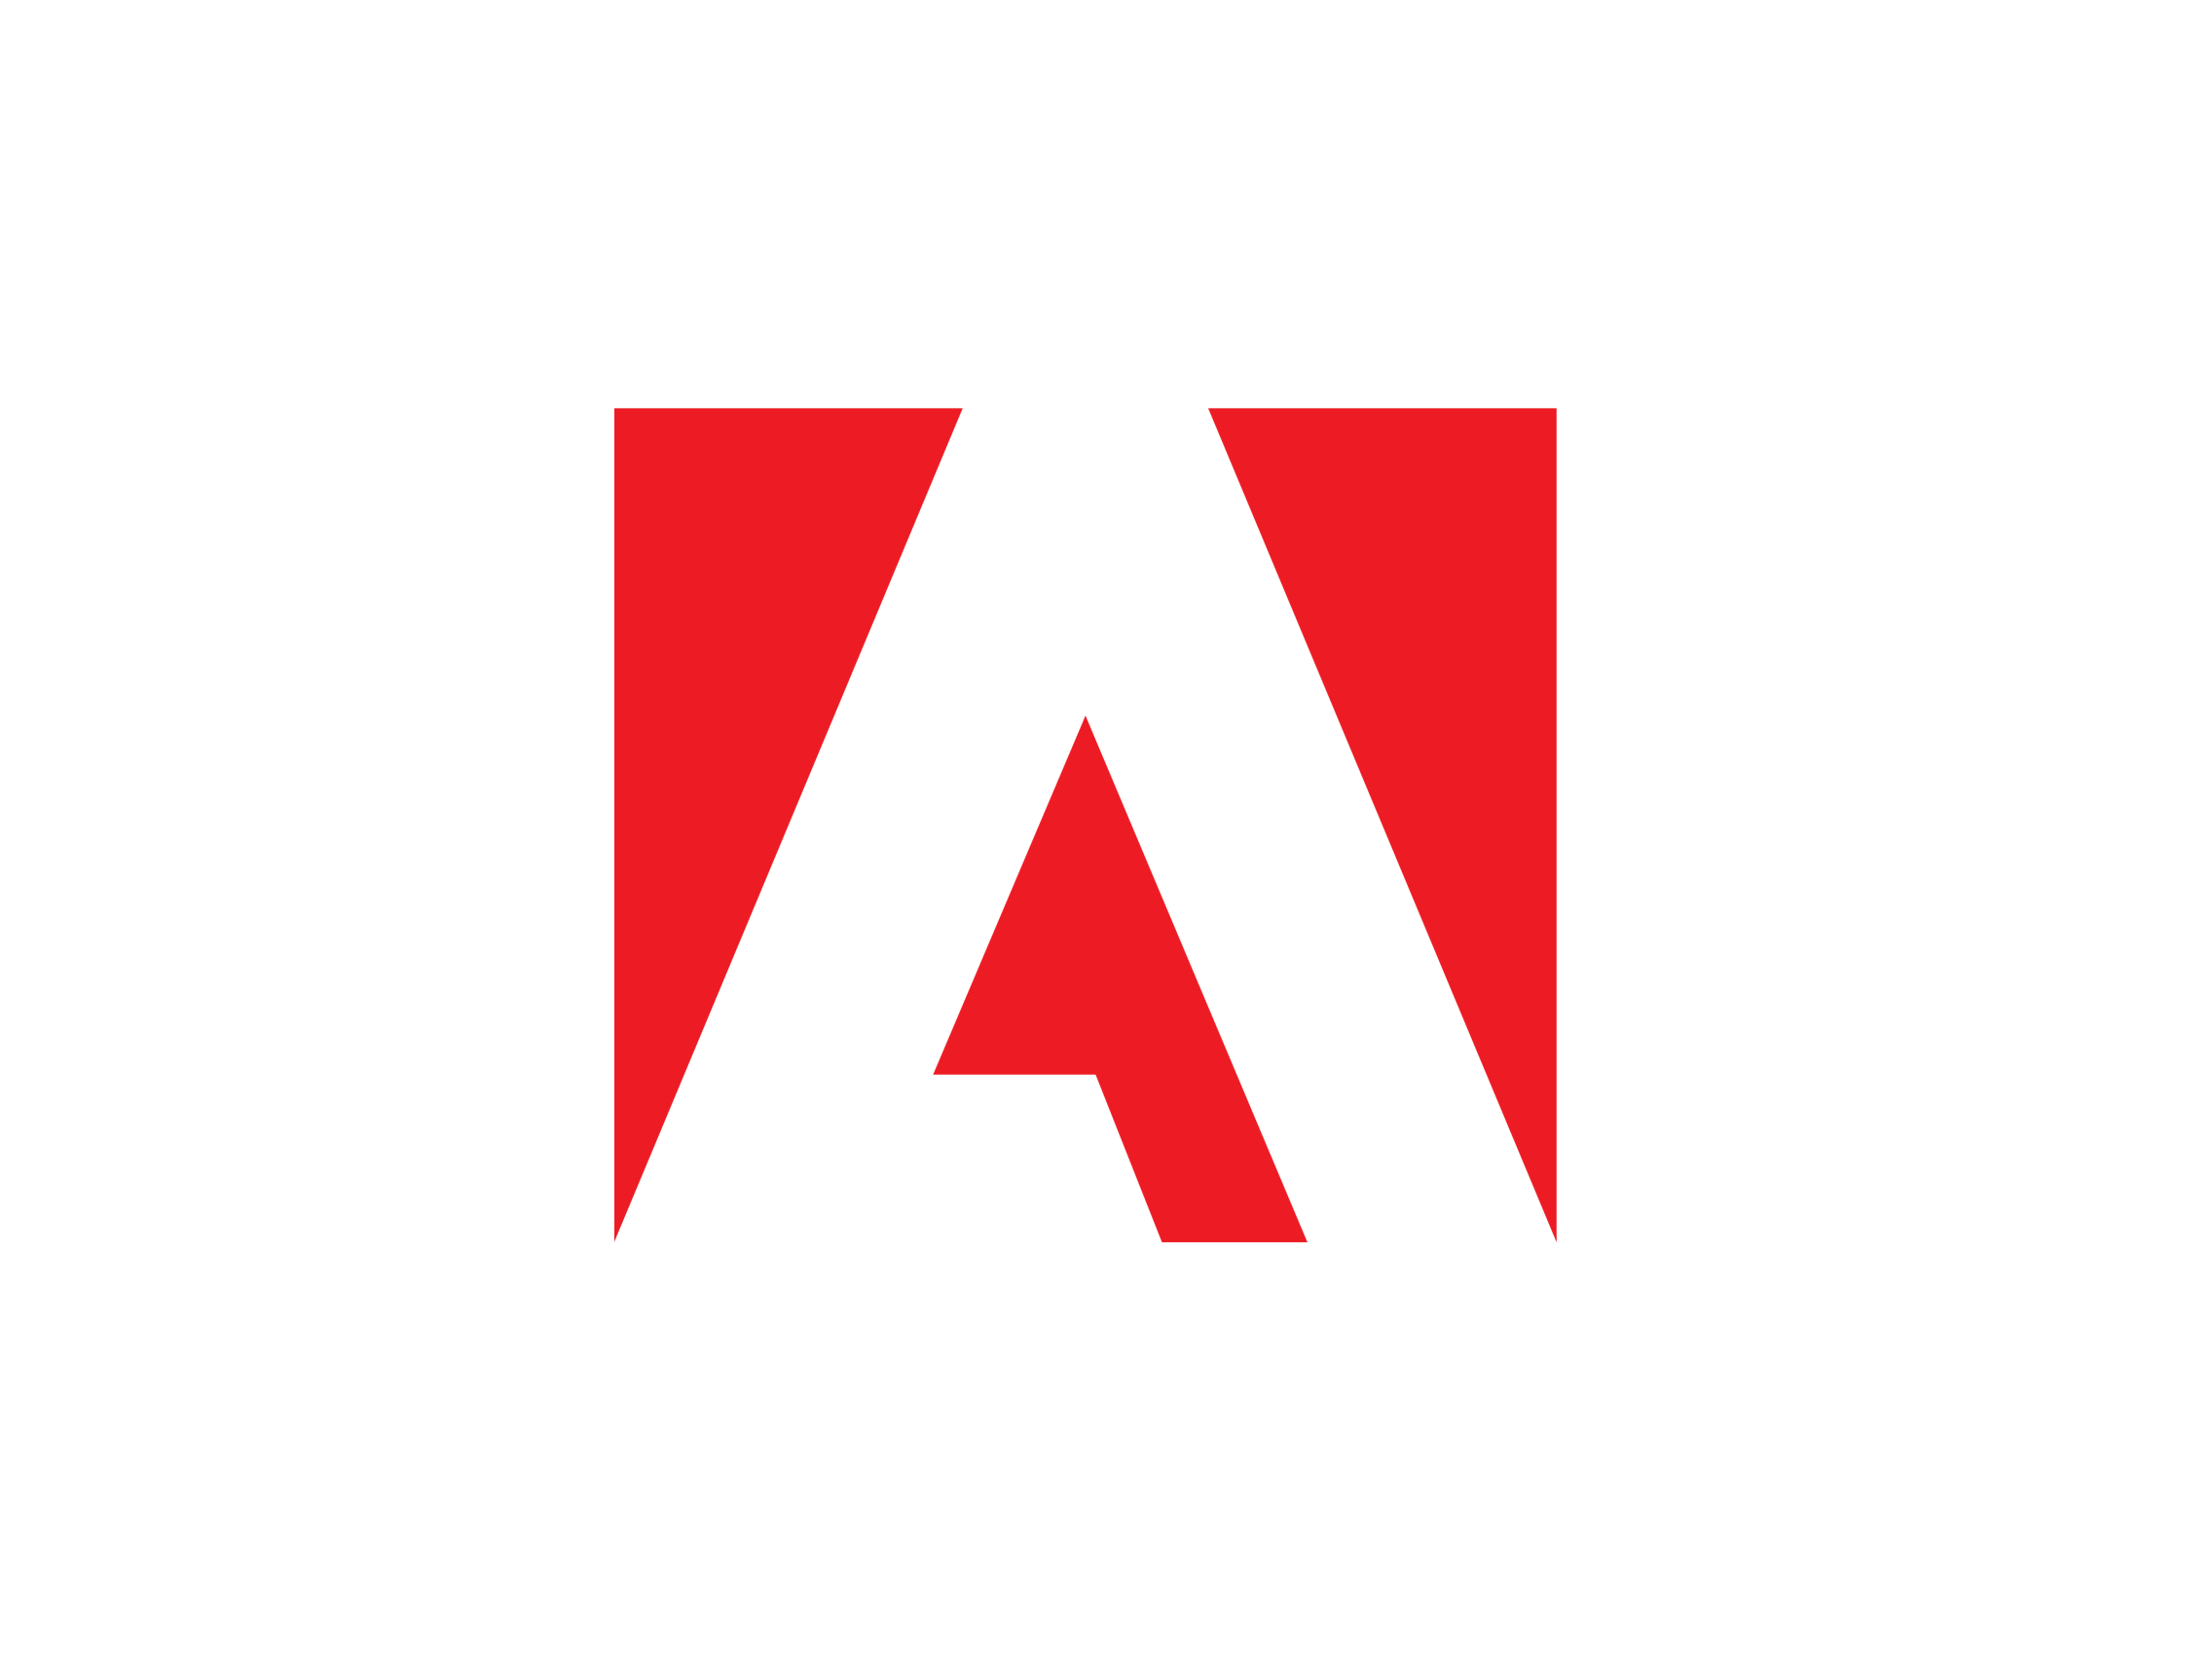 Adobe Experience Cloud Logo